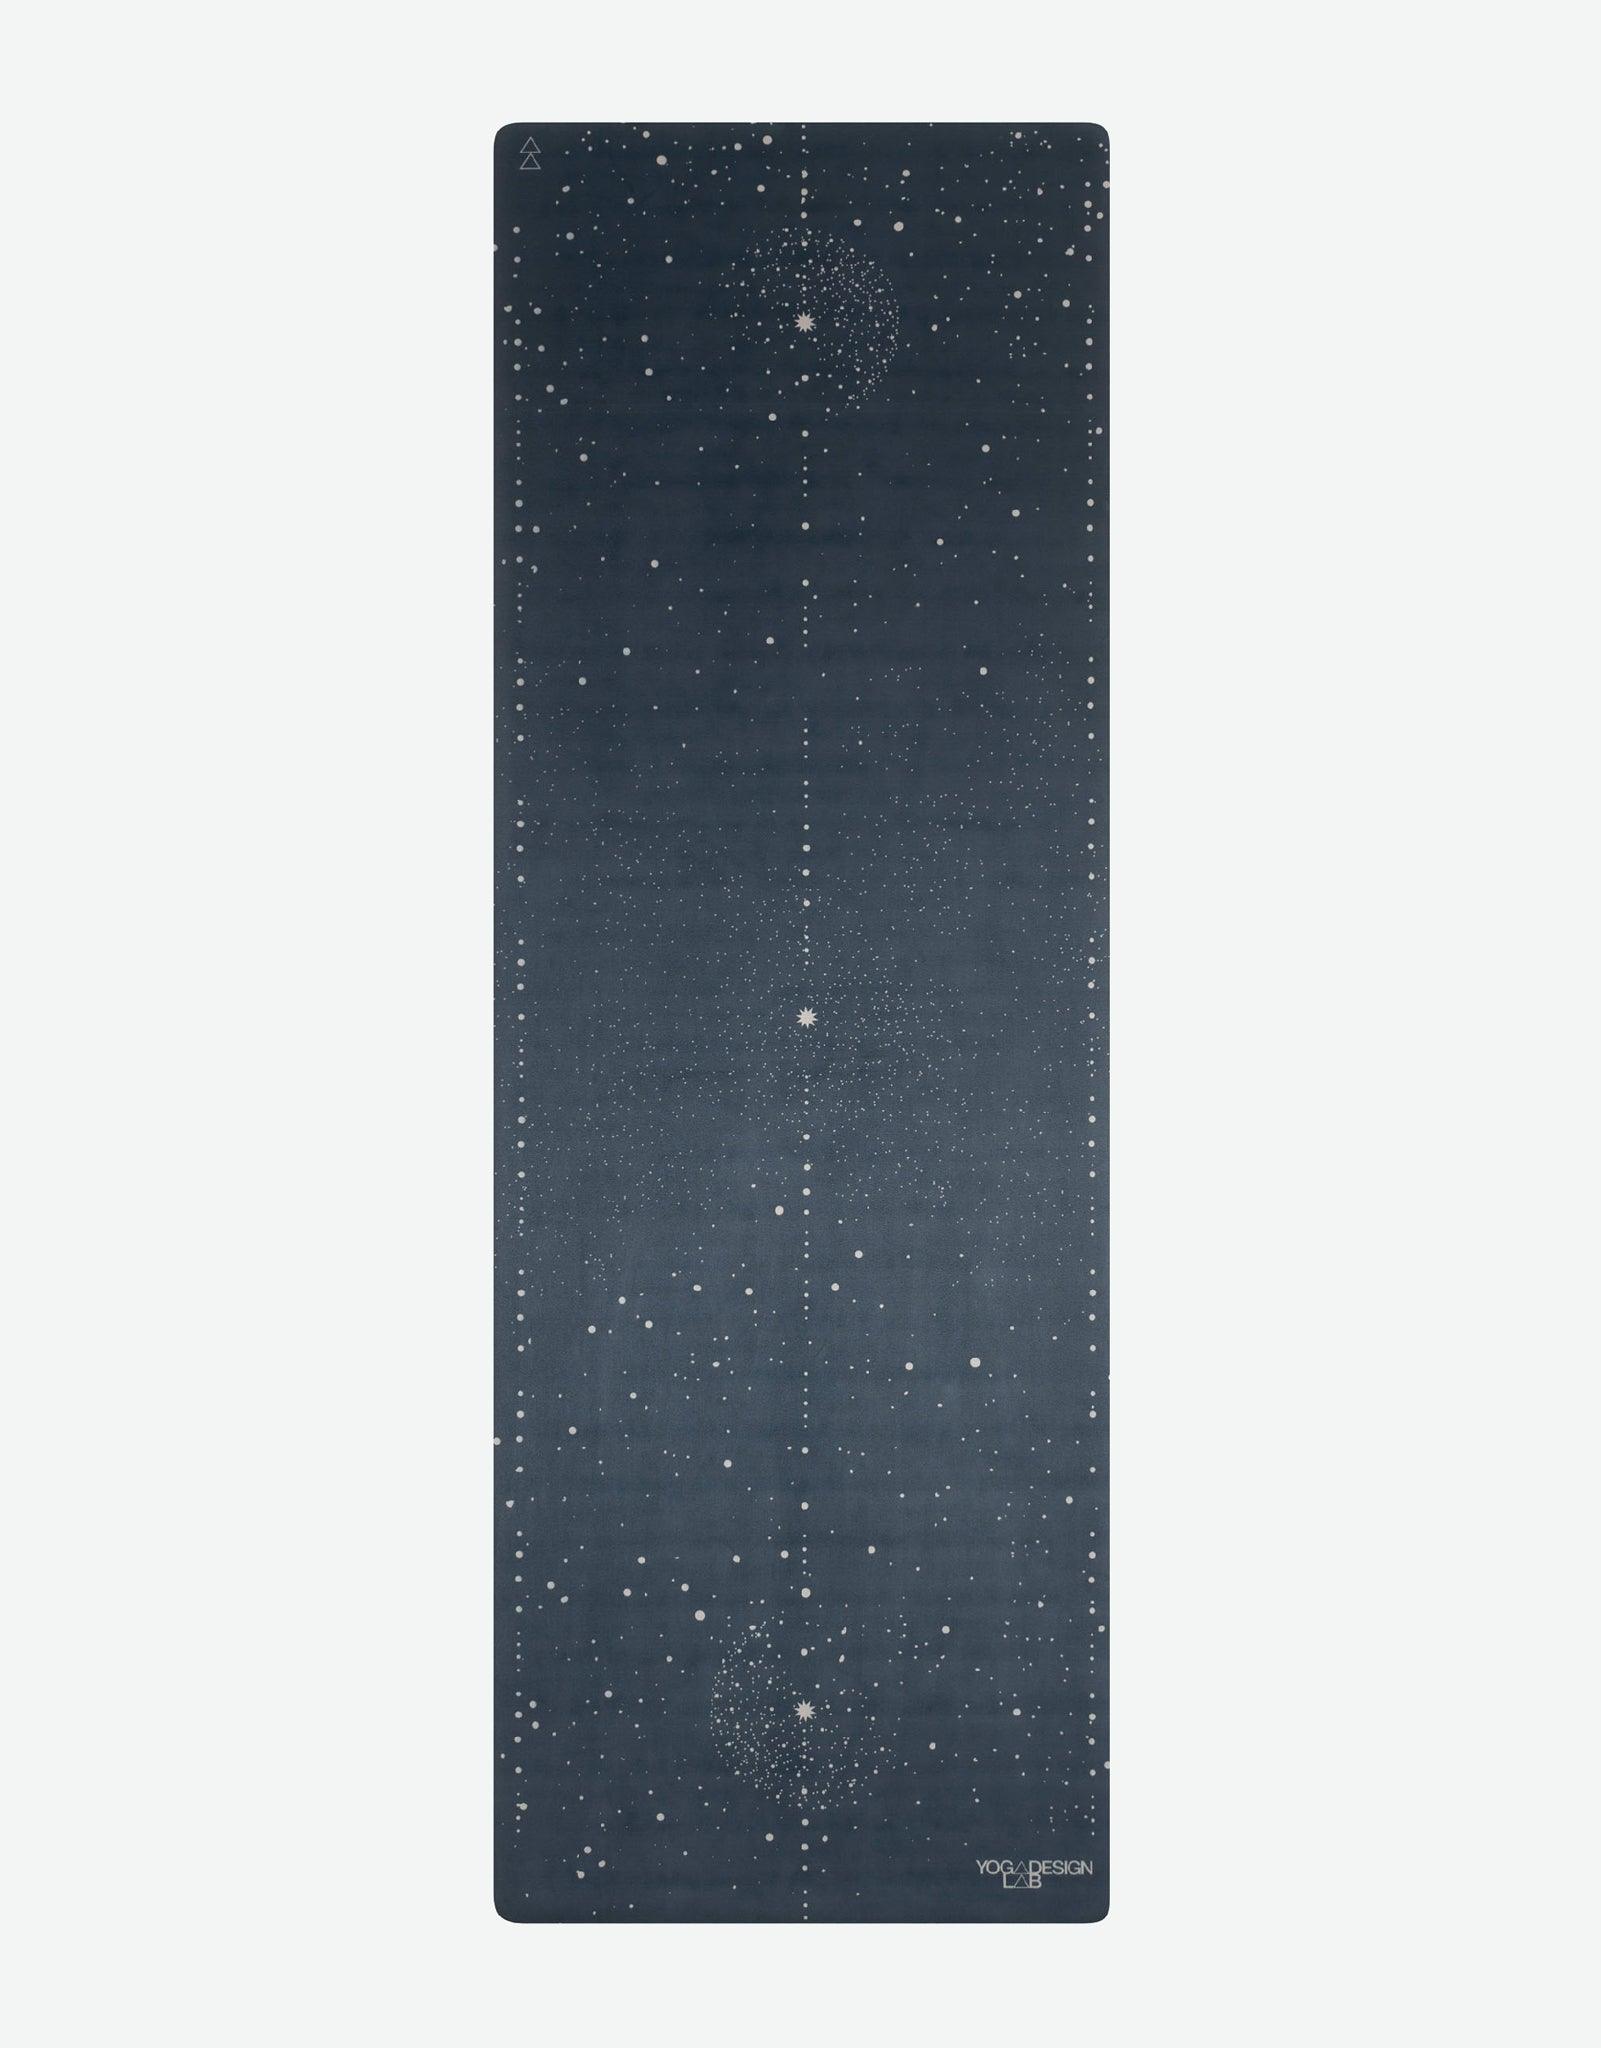 Combo Yoga Mat: 2-in-1 (Mat + Towel) - Celestial - Lightweight, Ultra-Soft - Yoga Design Lab 